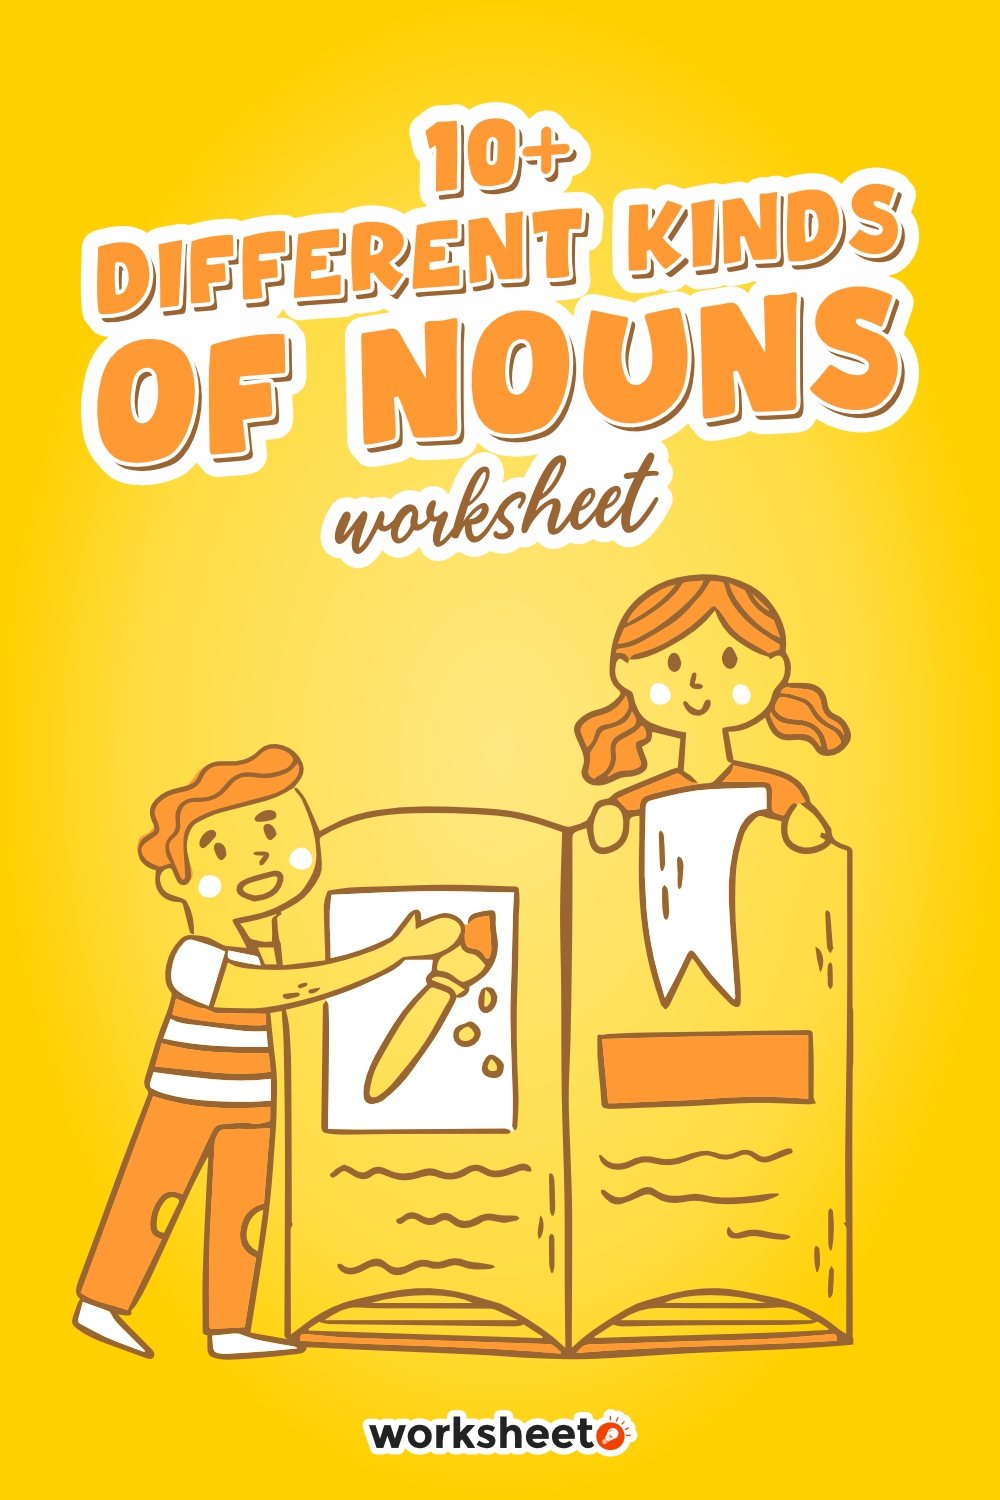 17 Different Kinds Of Nouns Worksheet Free PDF At Worksheeto